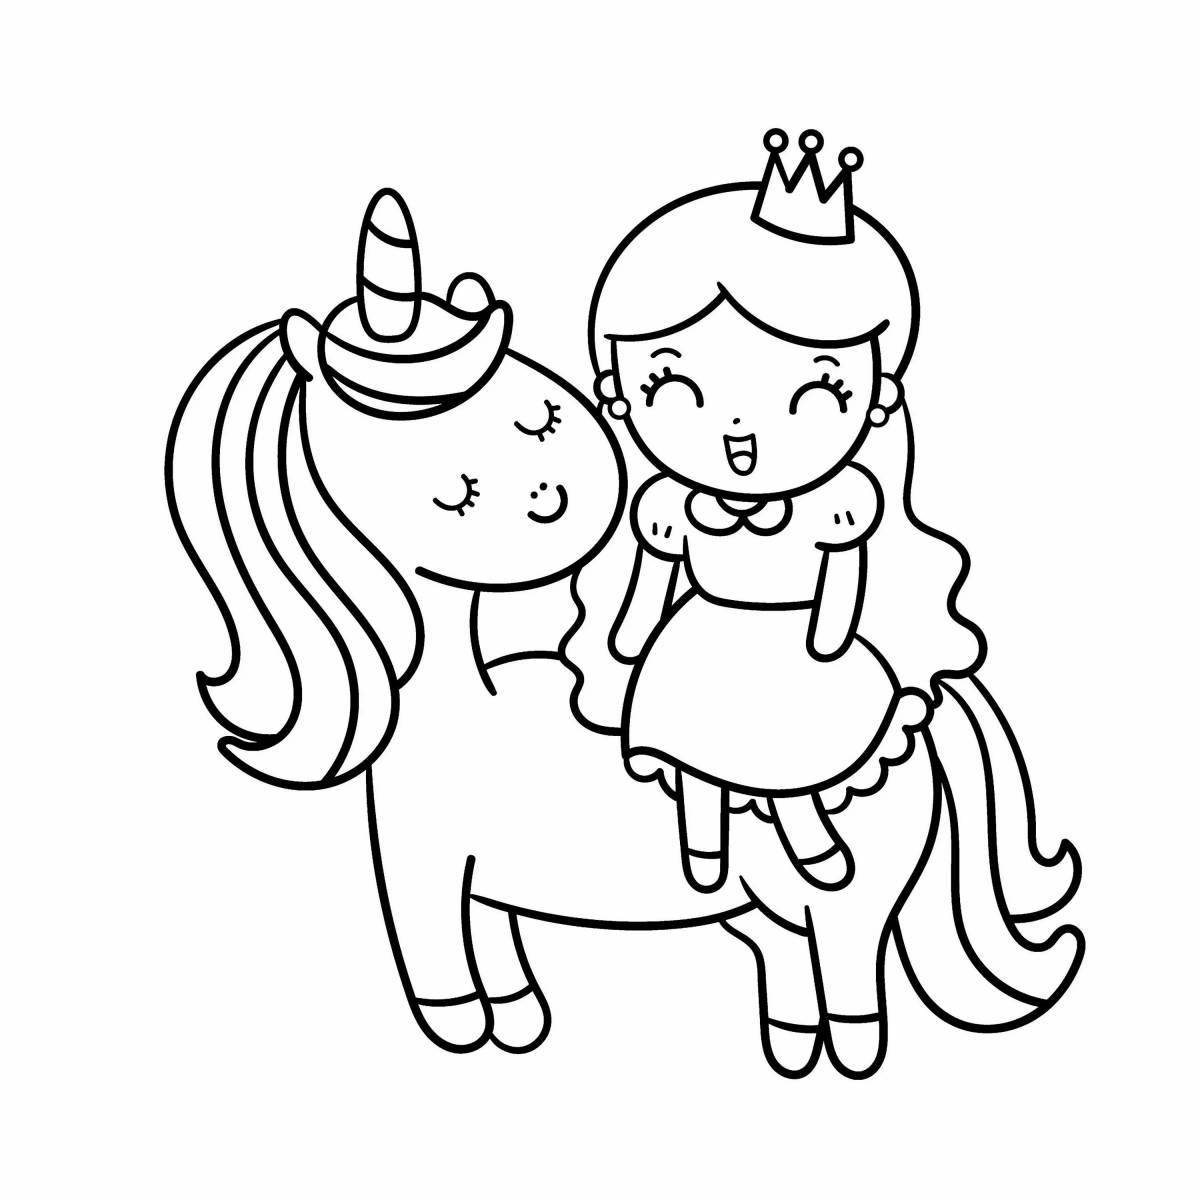 Wonderful coloring princess with unicorn